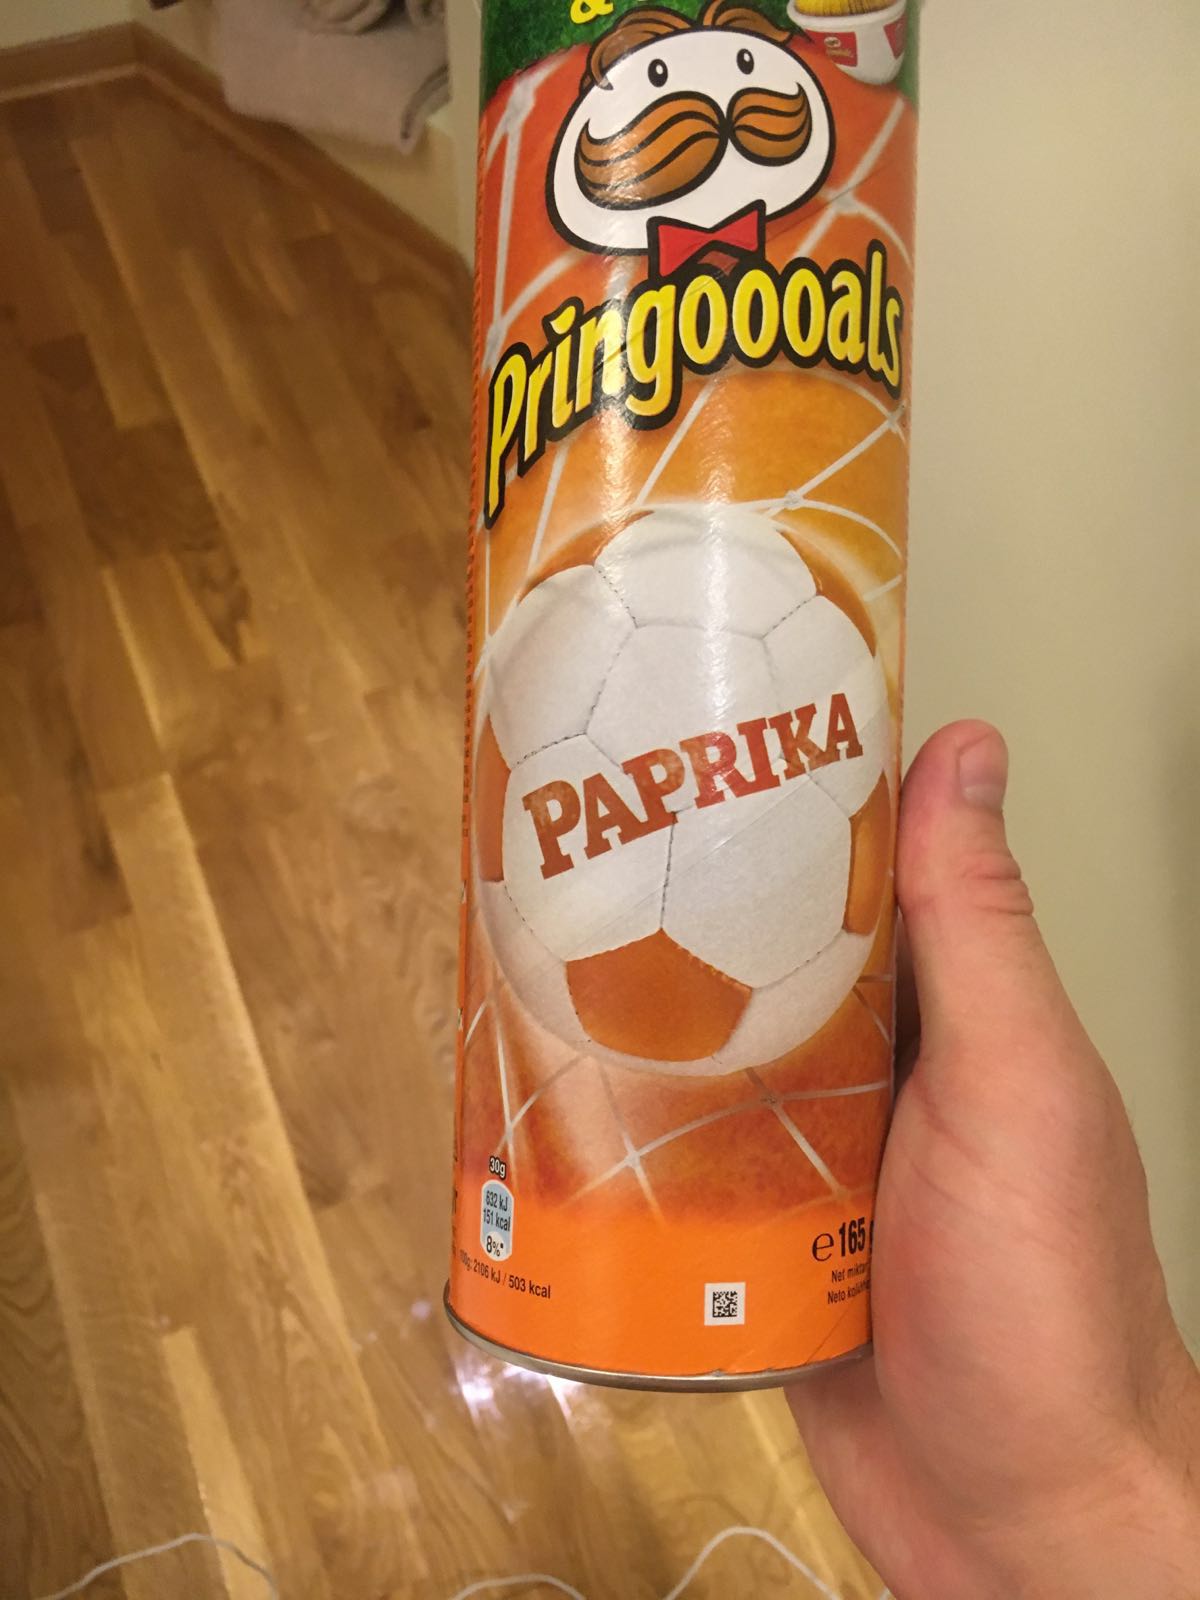 Paprika Pringles - The Official Pringle of Broatia